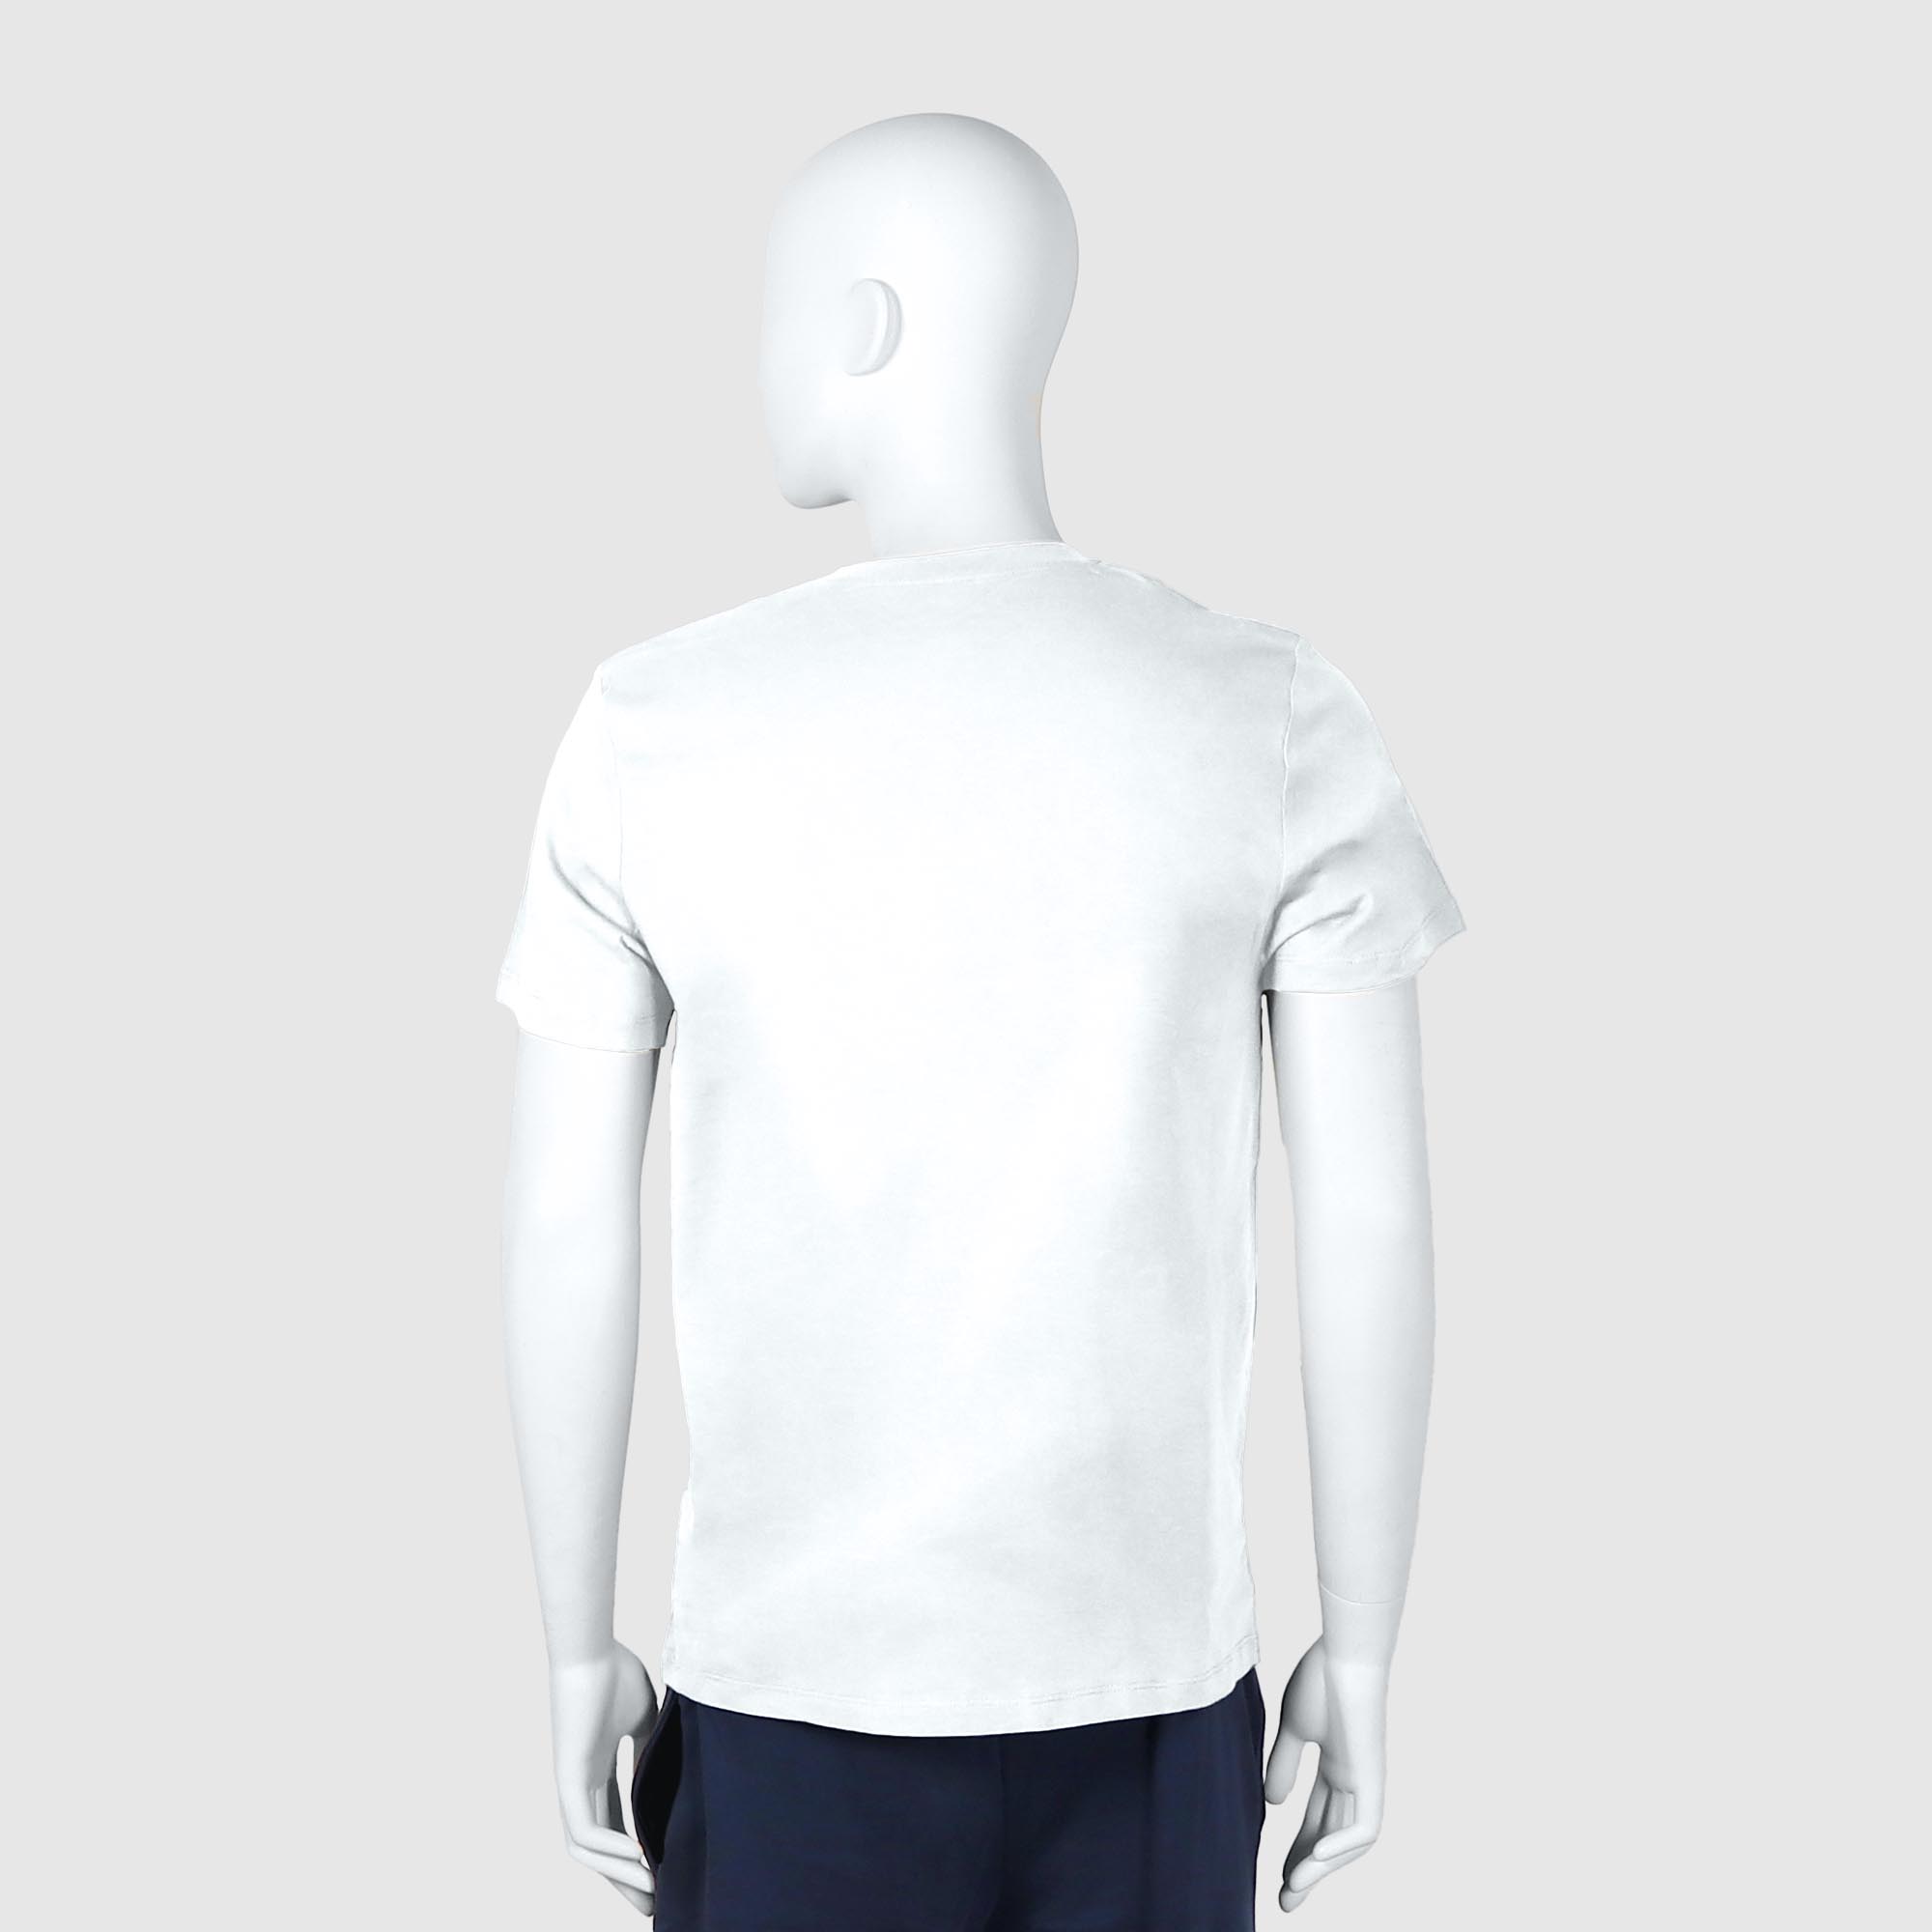 Мужская футболка Diva Teks белая (DTD-02), цвет белый, размер 48-50 - фото 2